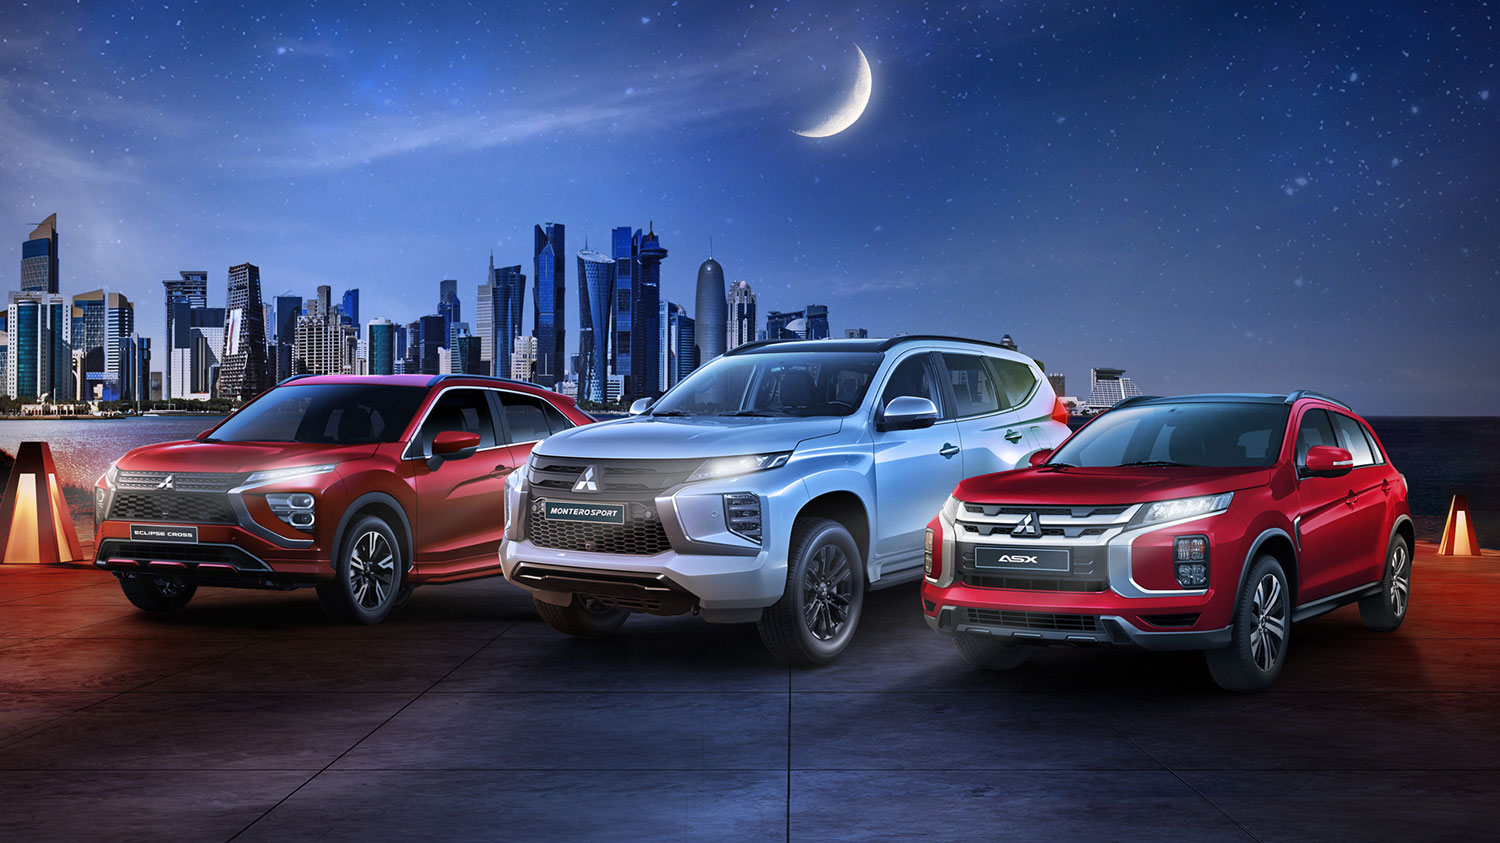 Qatar Automobiles Company Ramadan offers